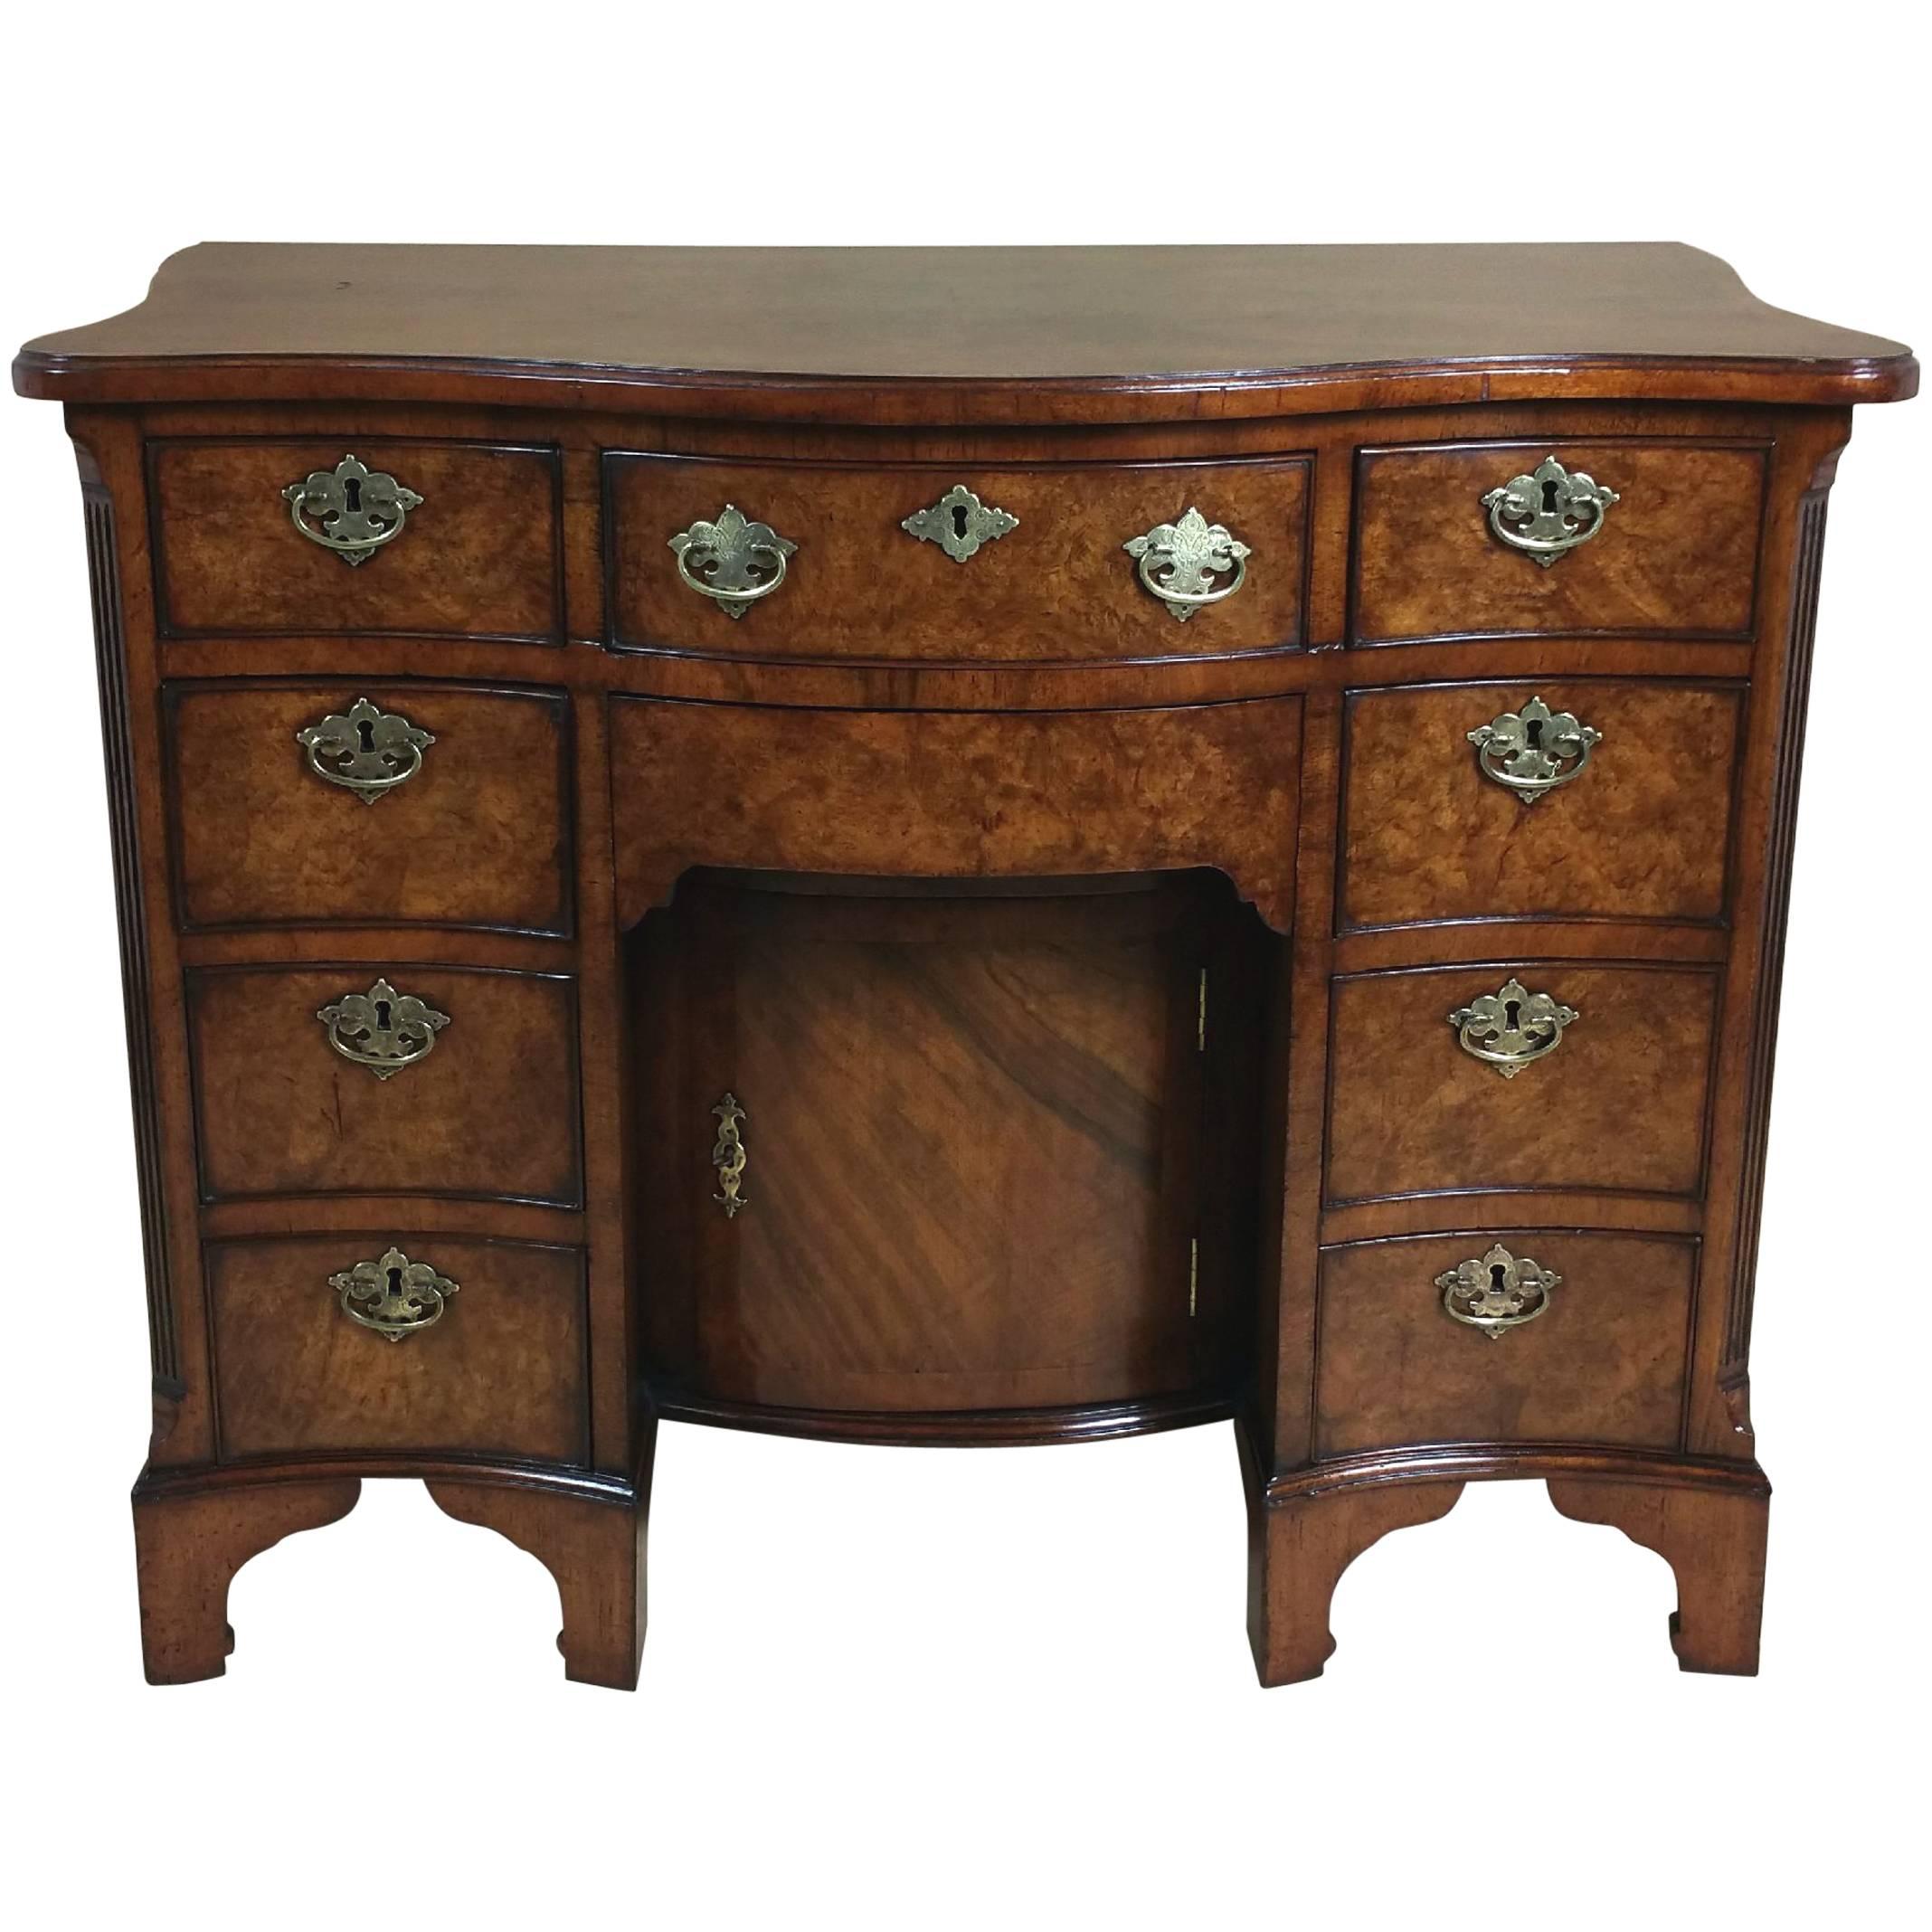 Late 19th Century Figured Walnut George I Style Serpentine Shaped Kneehole Desk